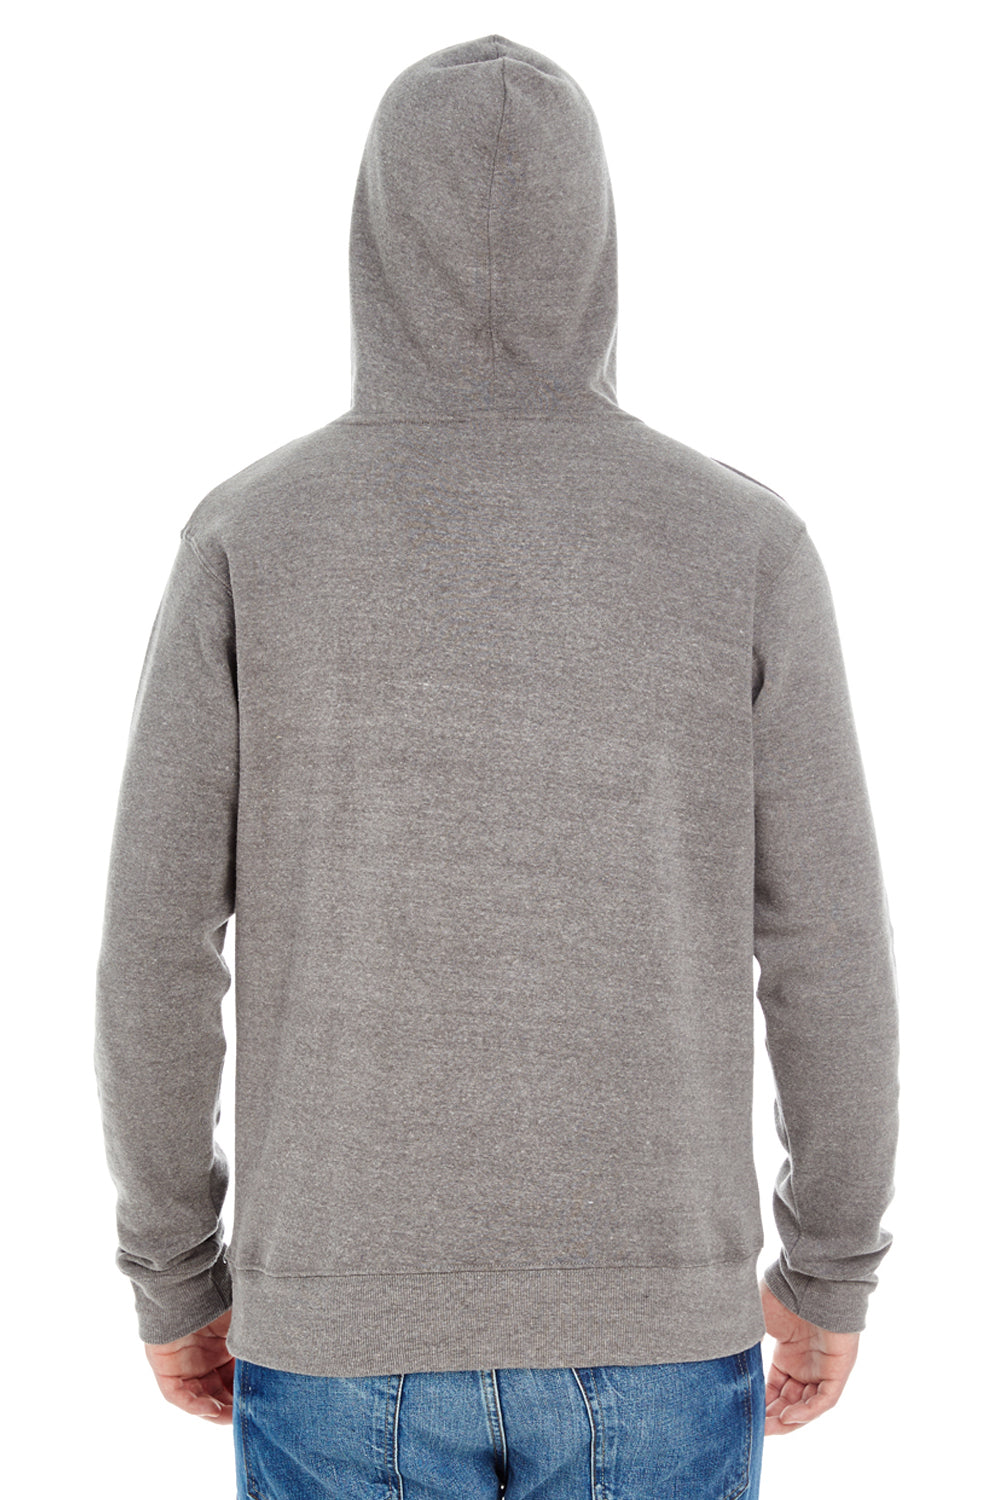 J America JA8871 Mens Fleece Hooded Sweatshirt Hoodie Smoke Grey Back